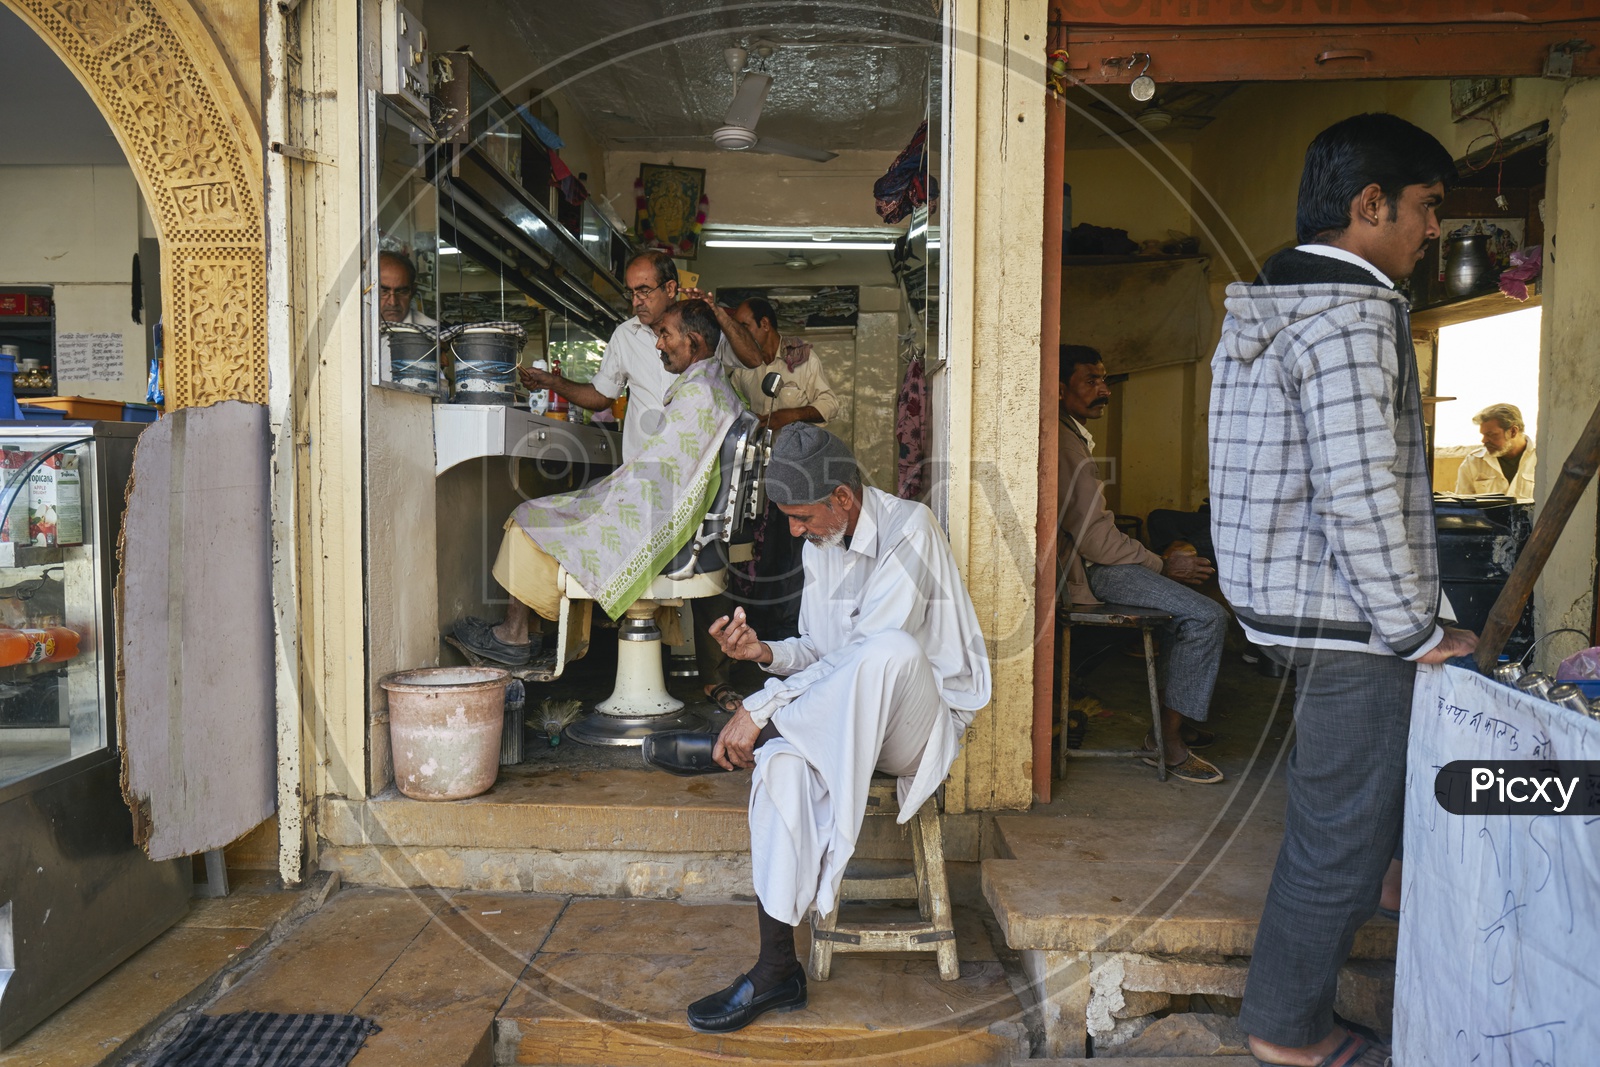 Local Barber